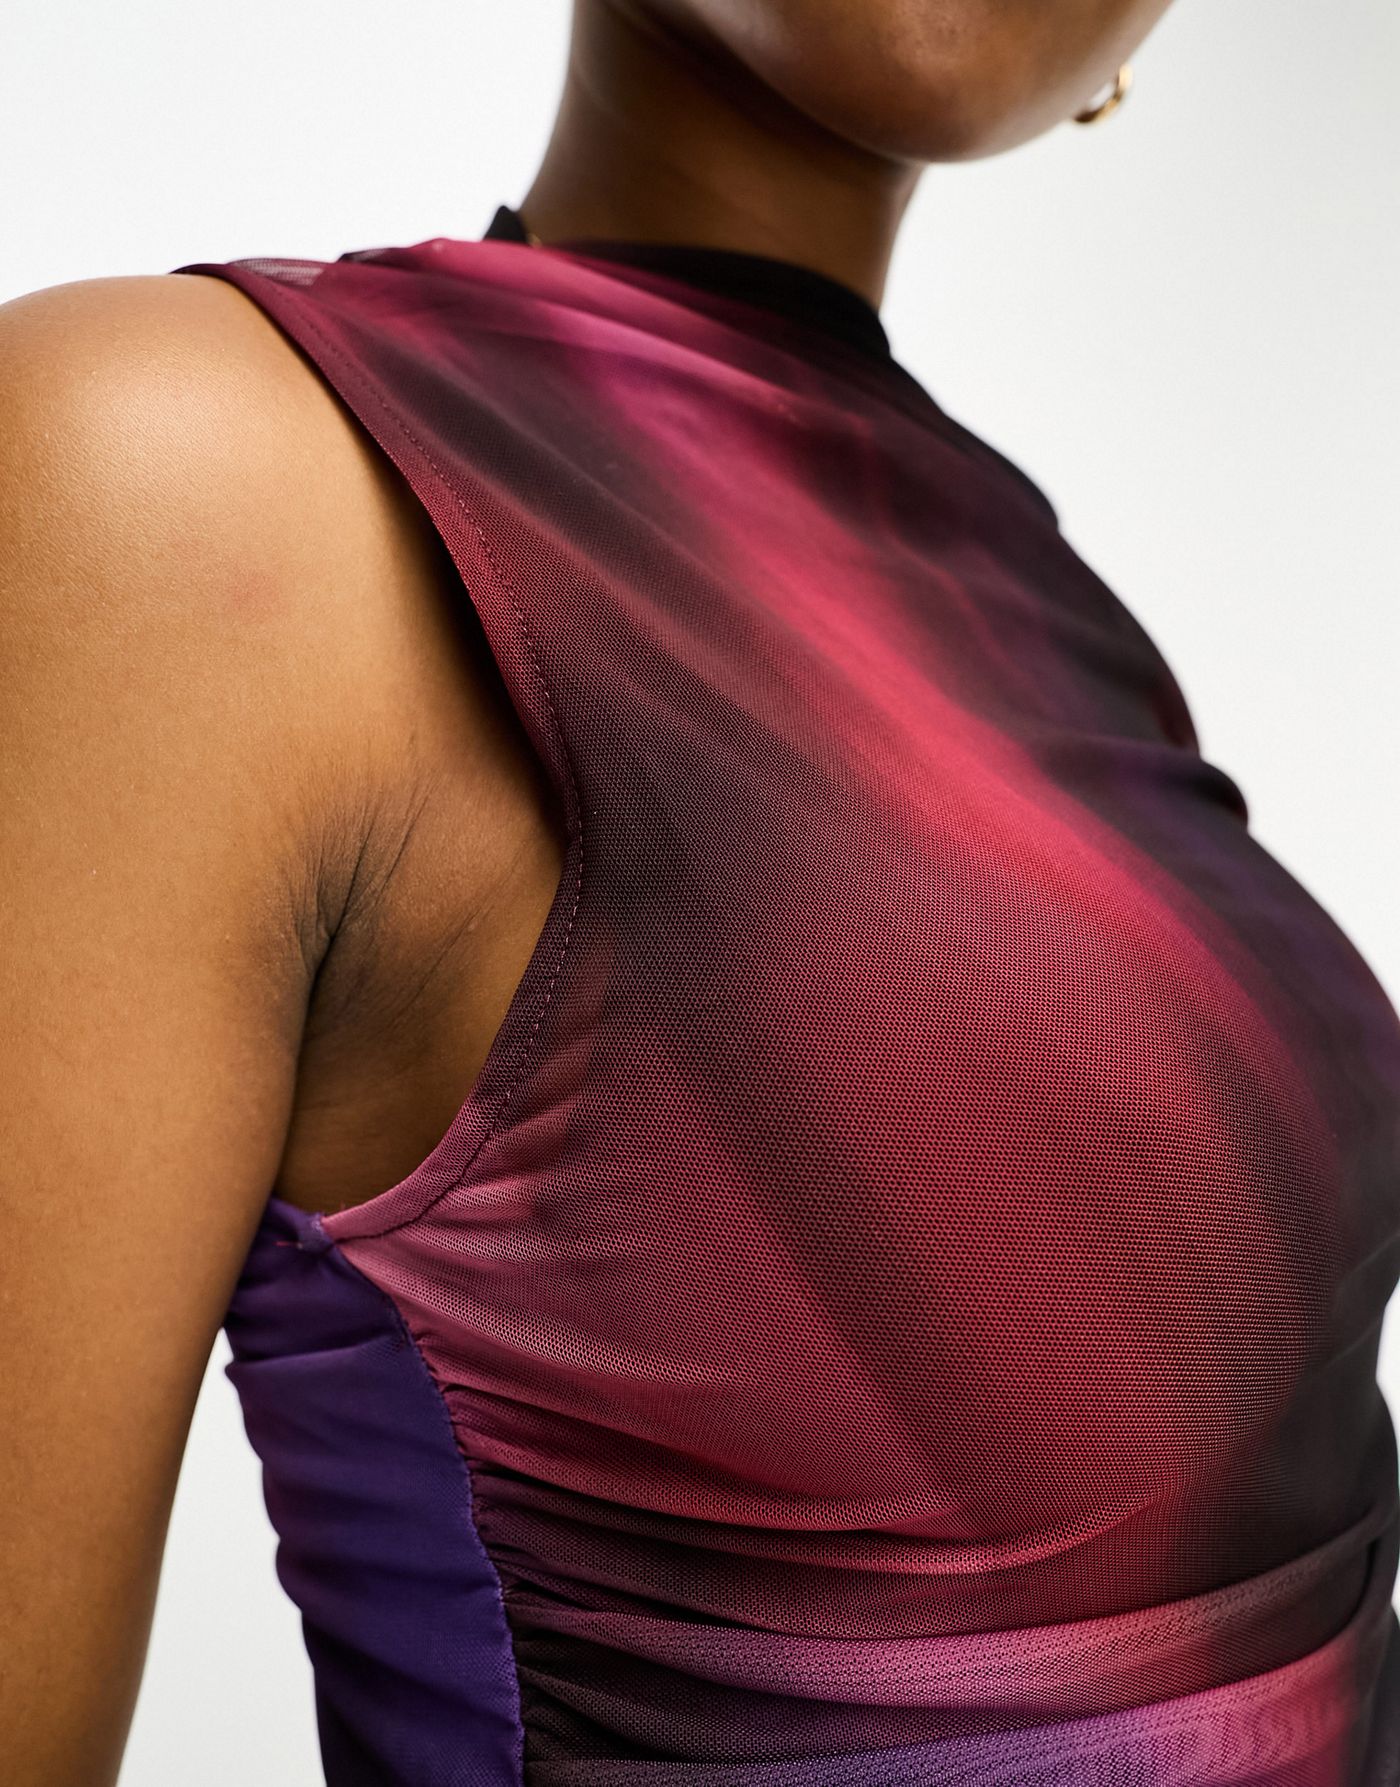 Pull&Bear mesh sleeveless maxi dress in purple ombre